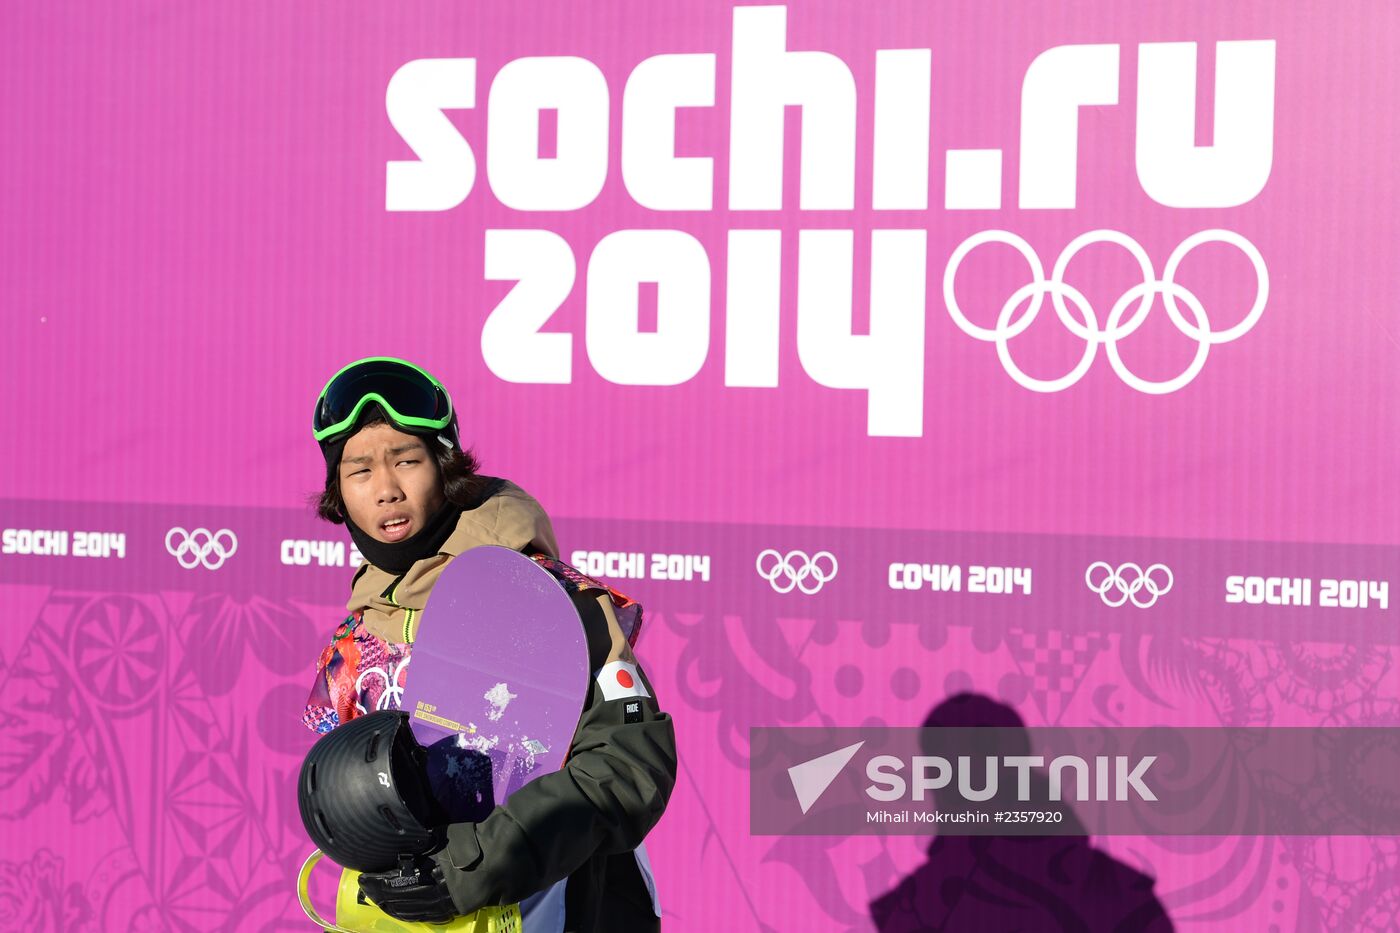 2014 Olympics. Snowboarding. Men. Slopestyle. Qualification